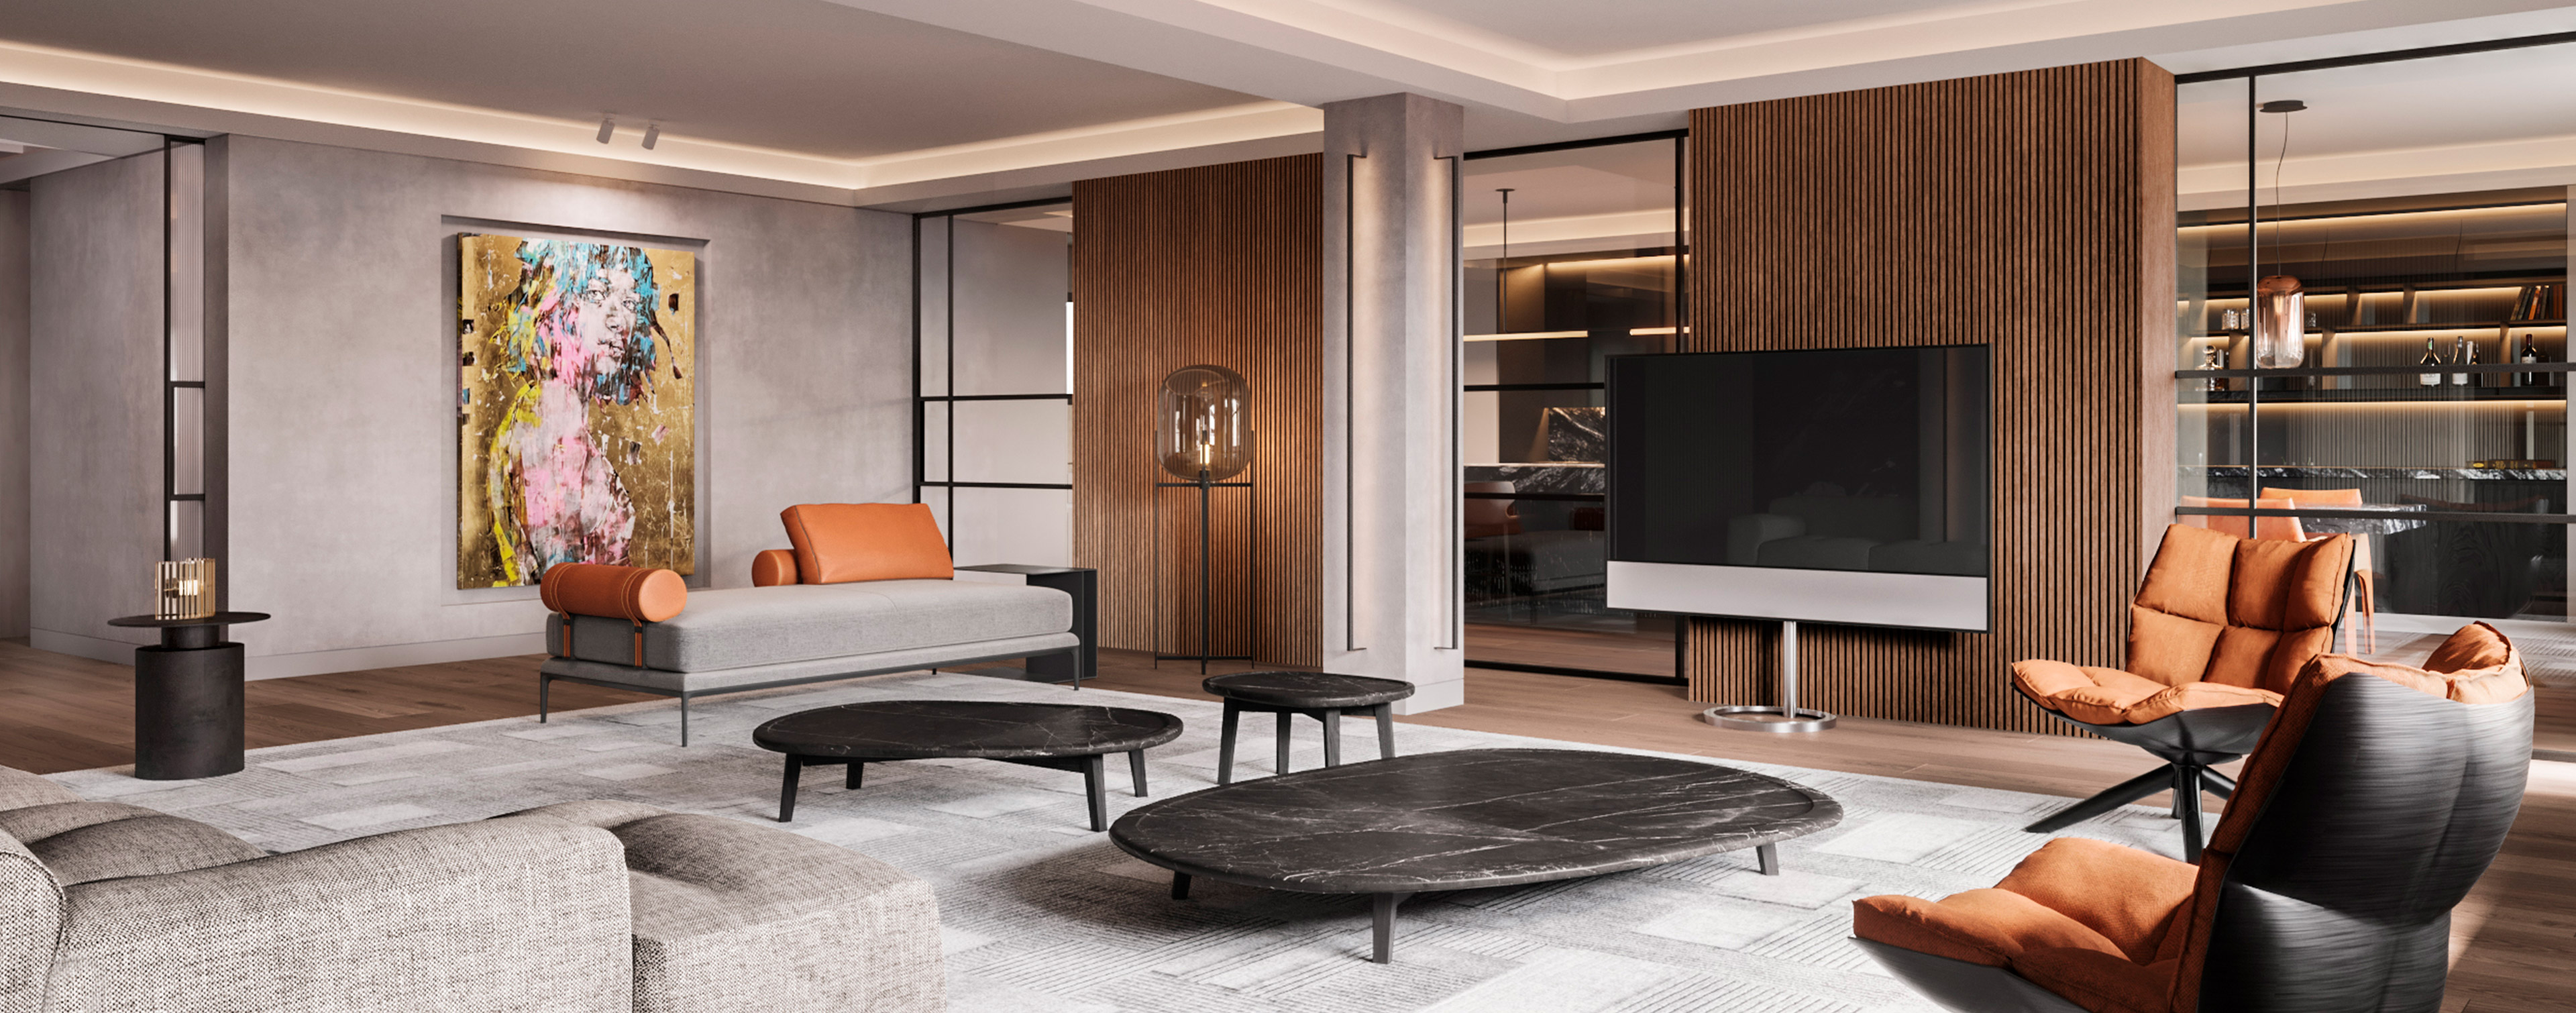 luv studio luxury architects madrid padilla apartment IMG 01 - LUV Studio - Arquitectura y diseño - Barcelona